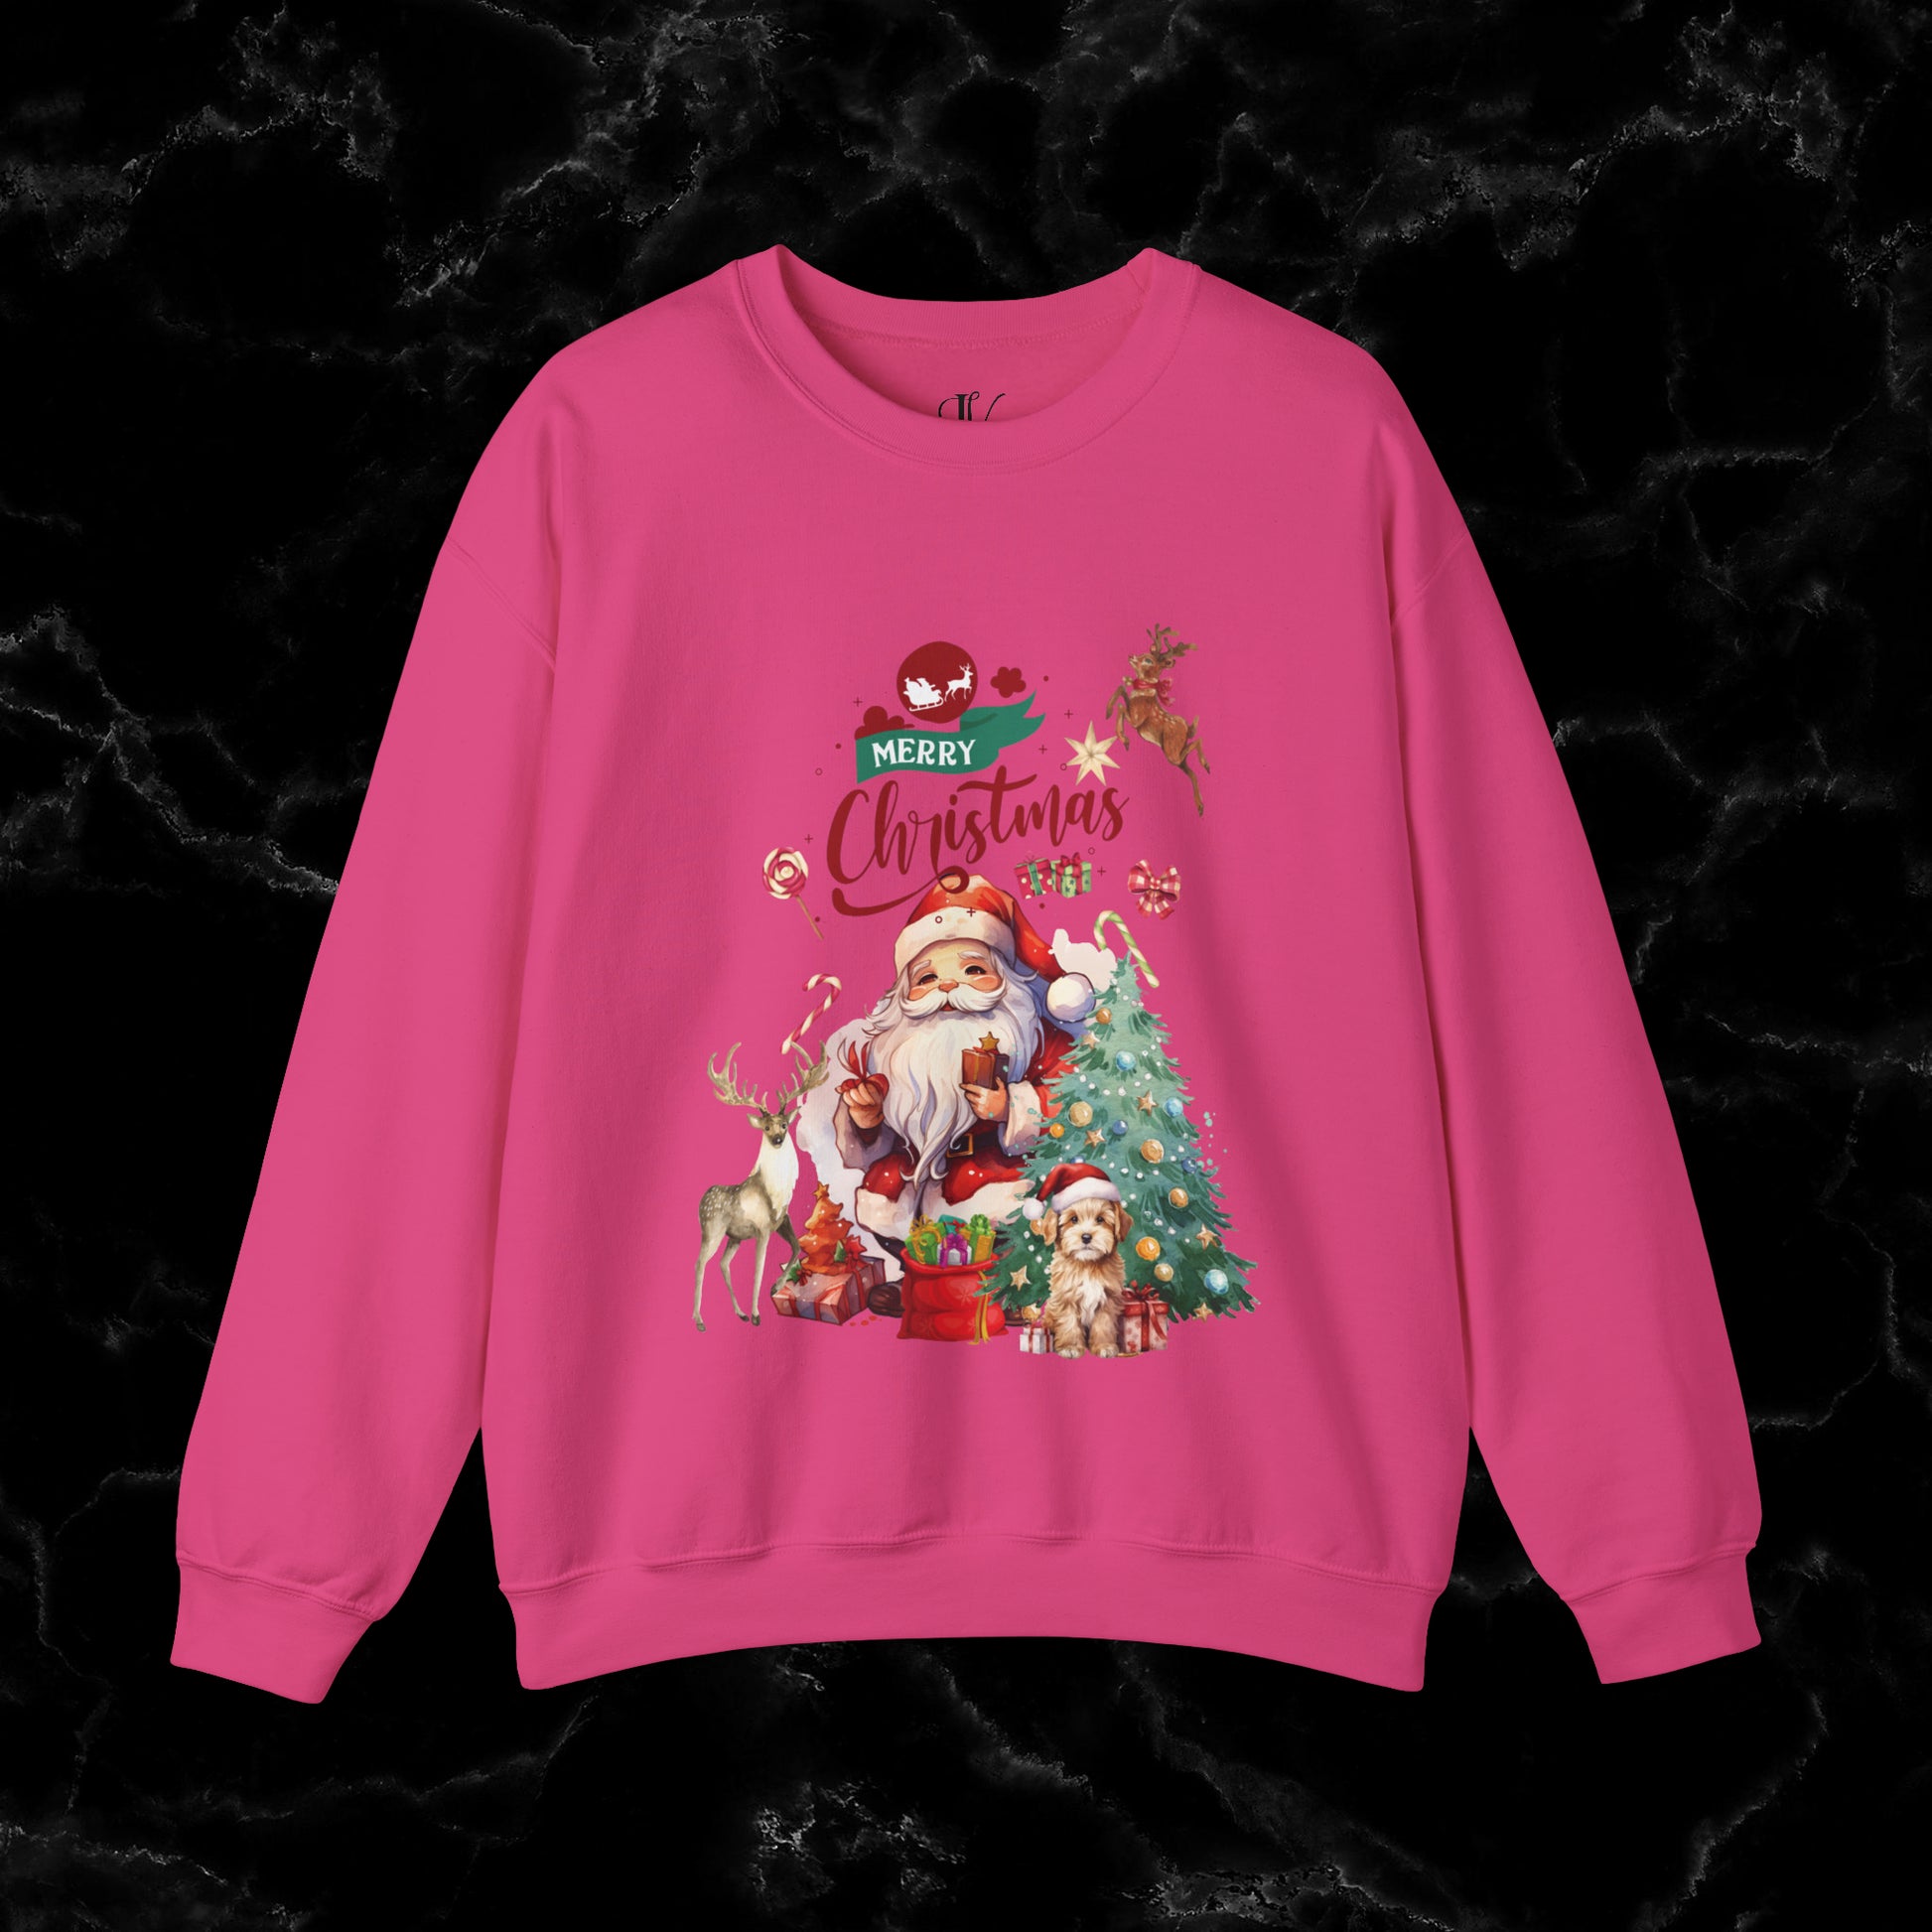 Merry Christmas Sweatshirt | Christmas Shirt - Matching Christmas Shirt - Santa Claus Merry Christmas Sweatshirt - Holiday Gift - Christmas Gift Sweatshirt S Heliconia 